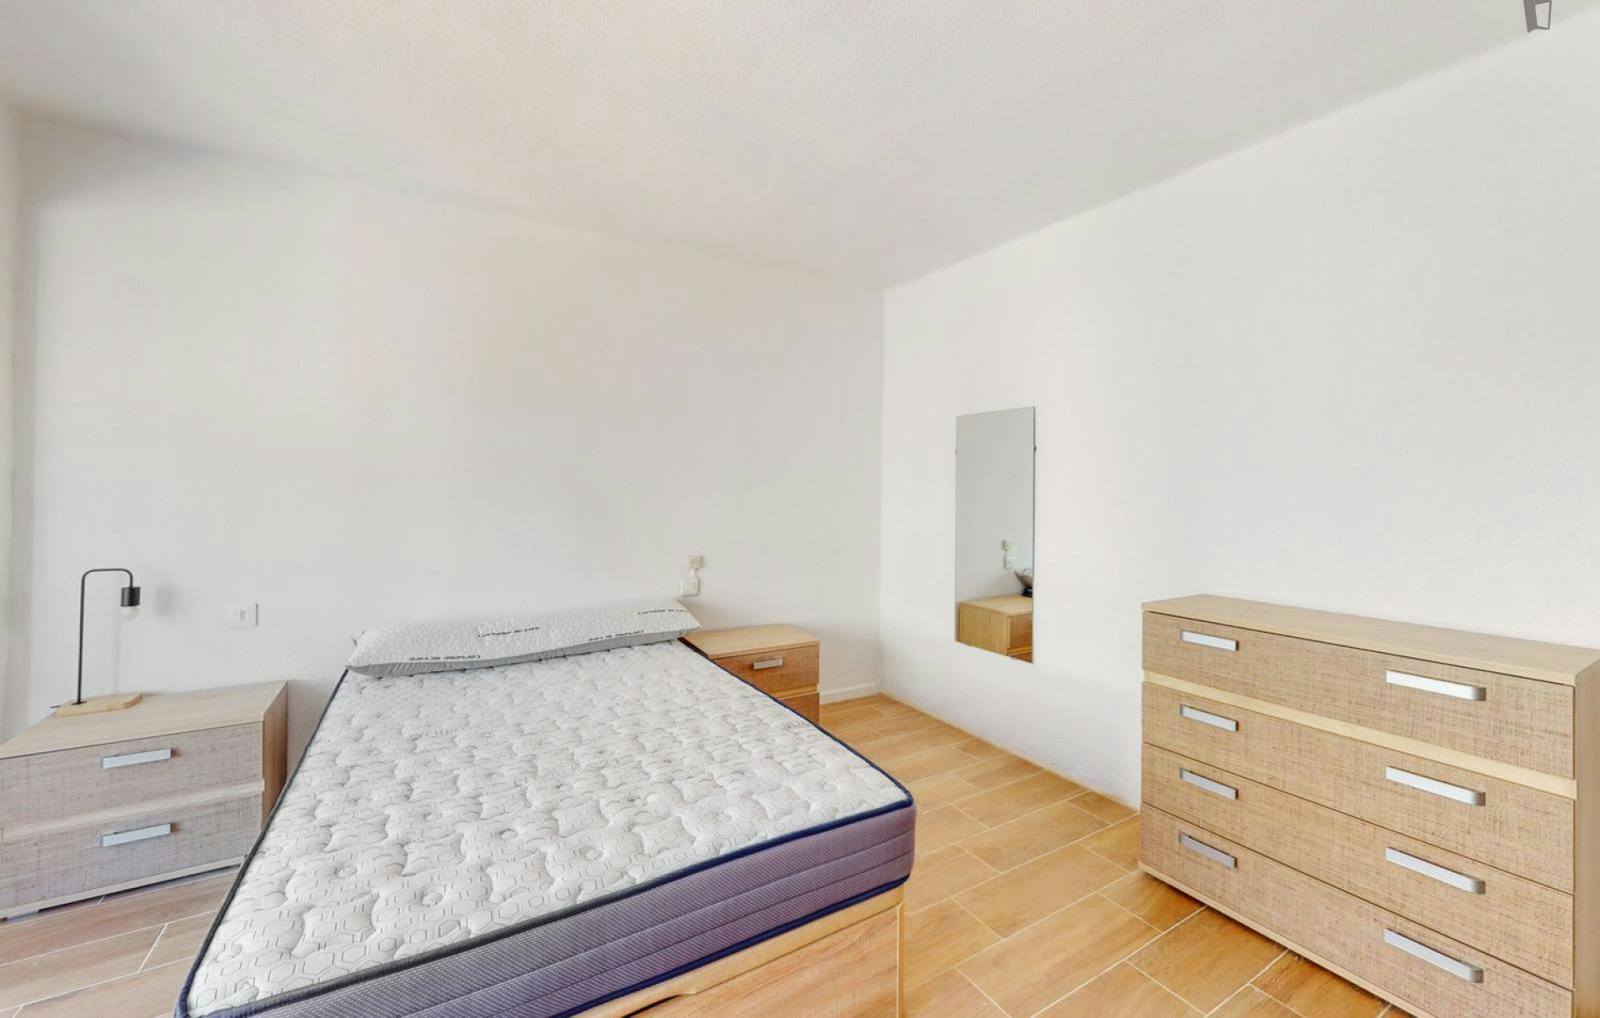 Large Appealing single bedroom